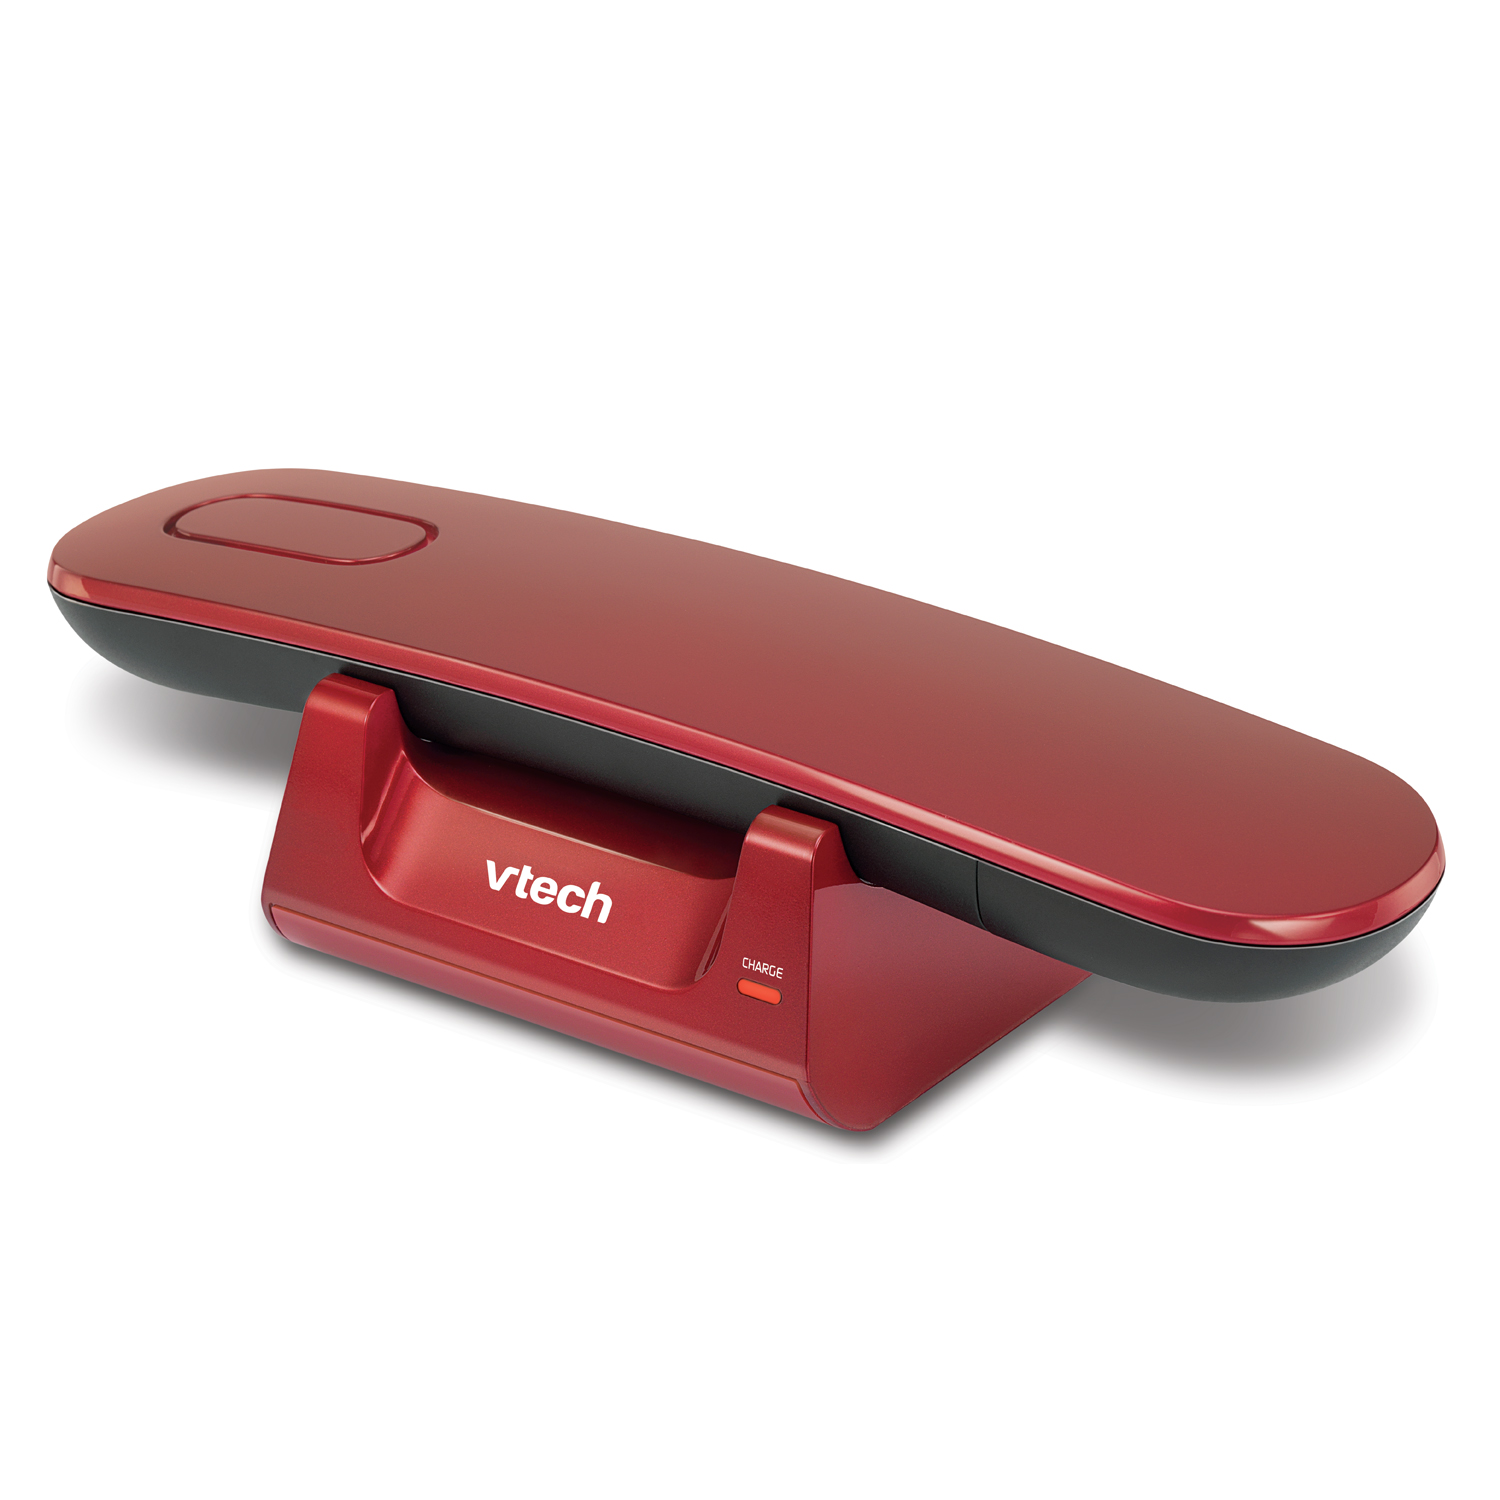 Accessory Handset for The VTech Retro Phone 